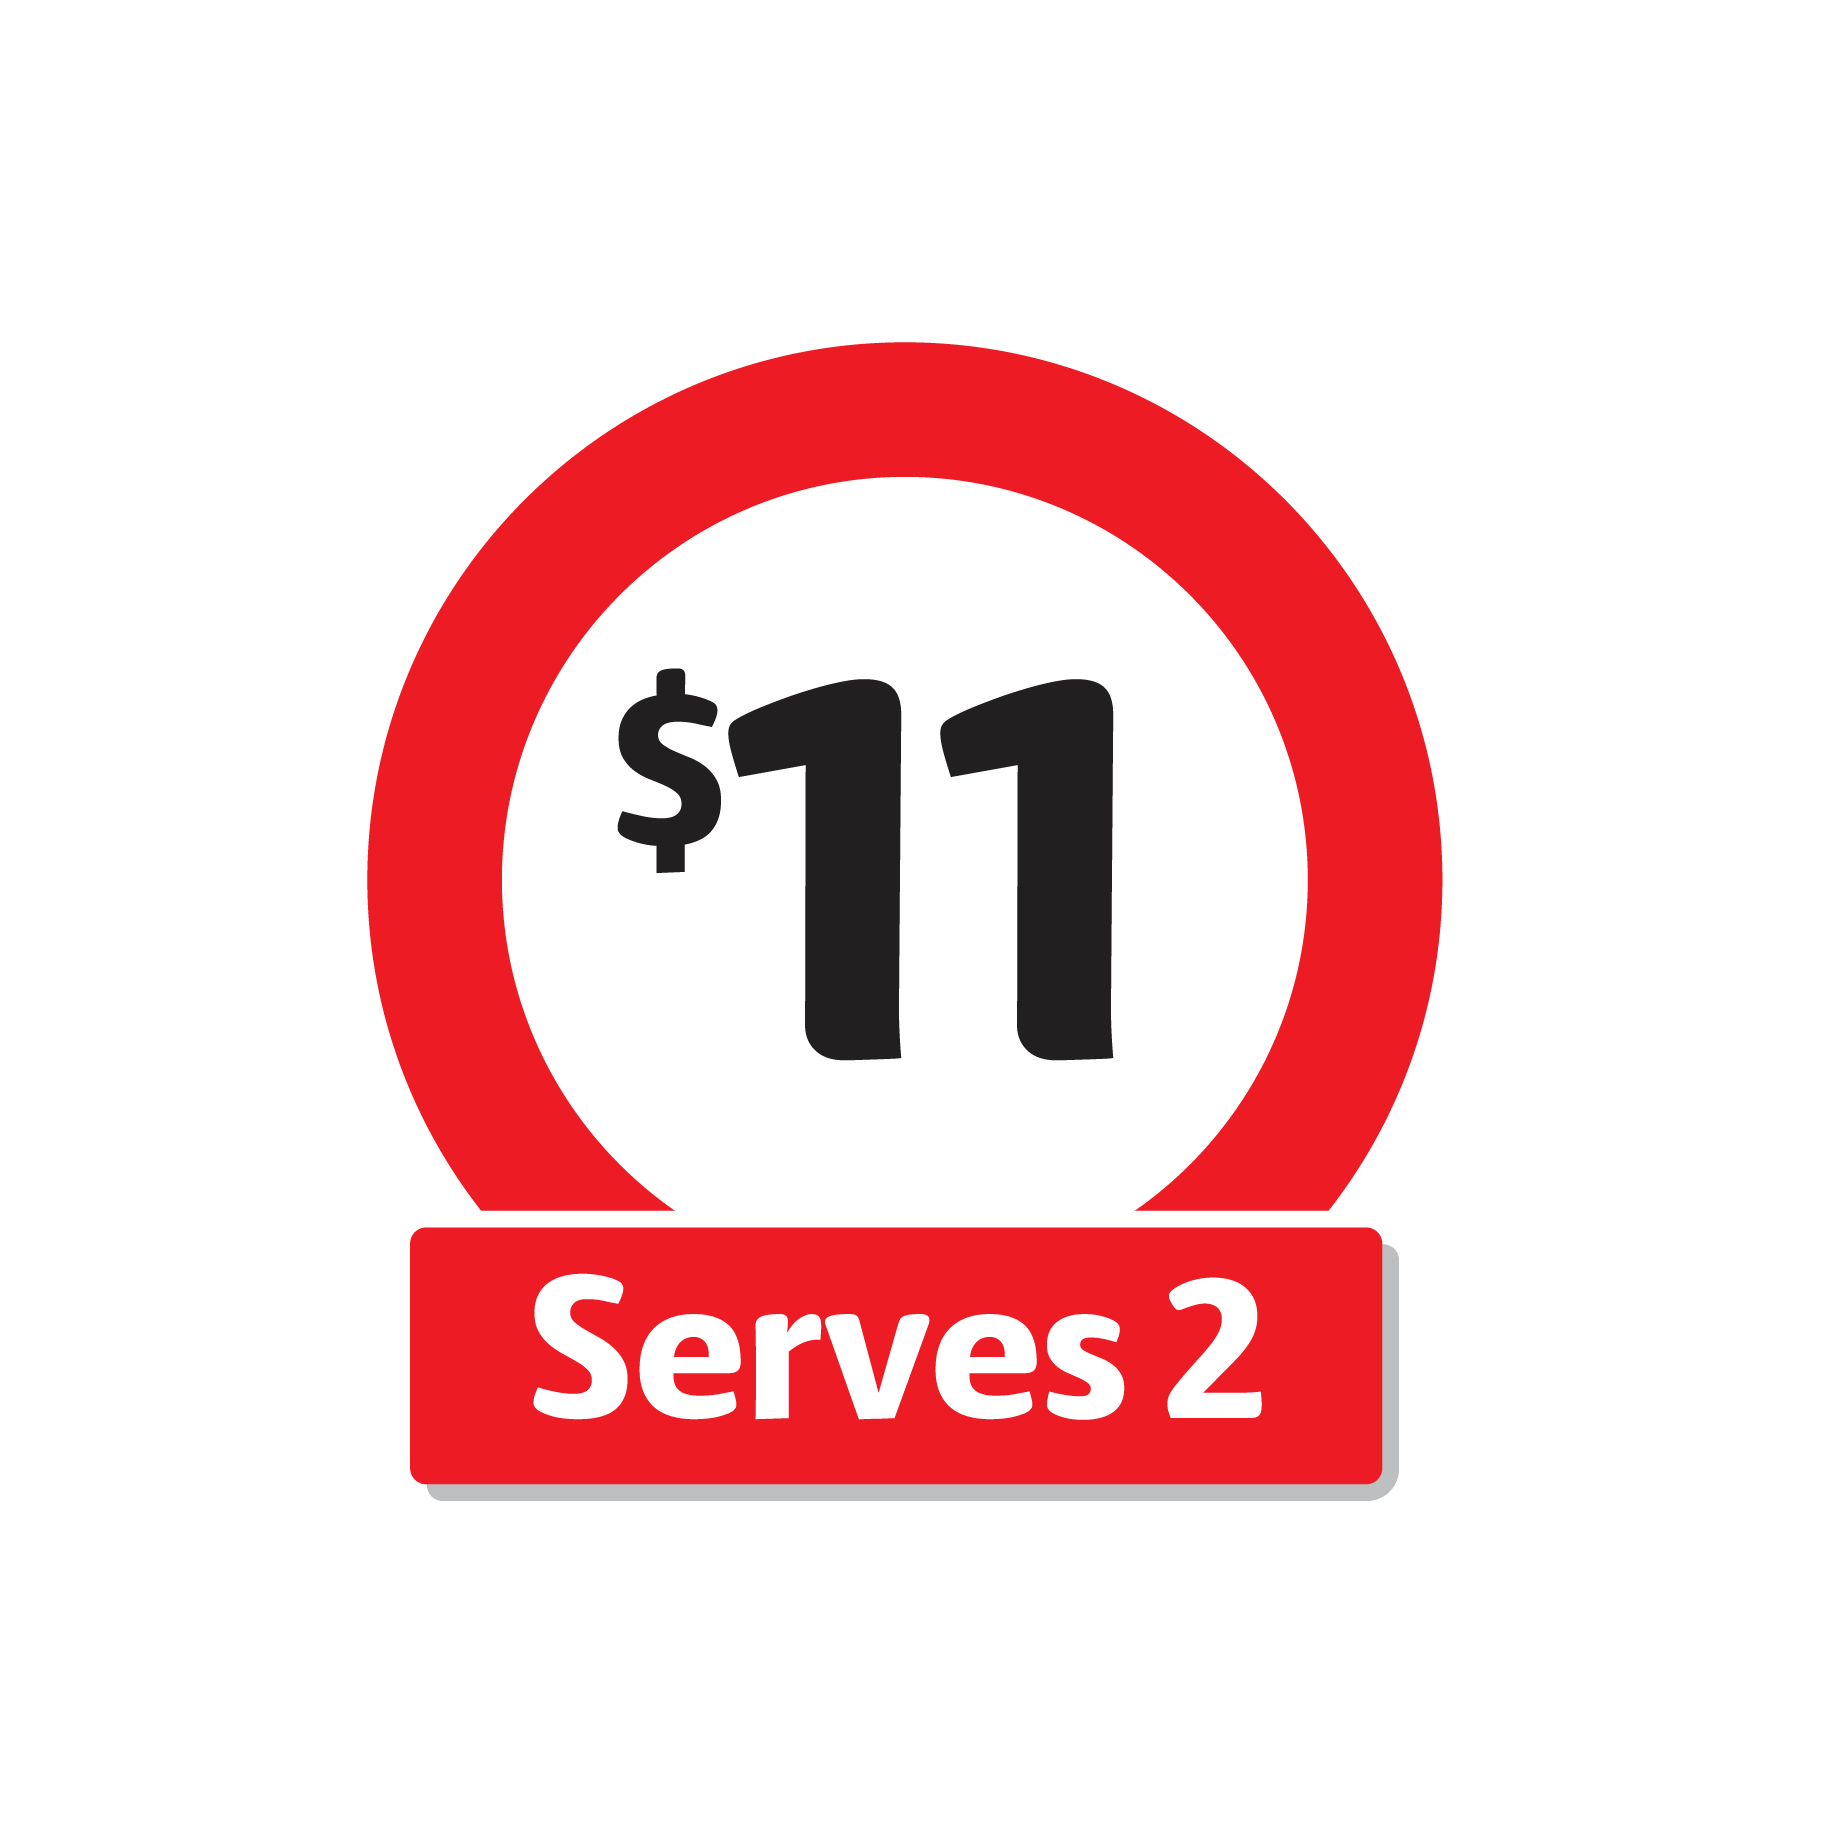 $11, serves 2